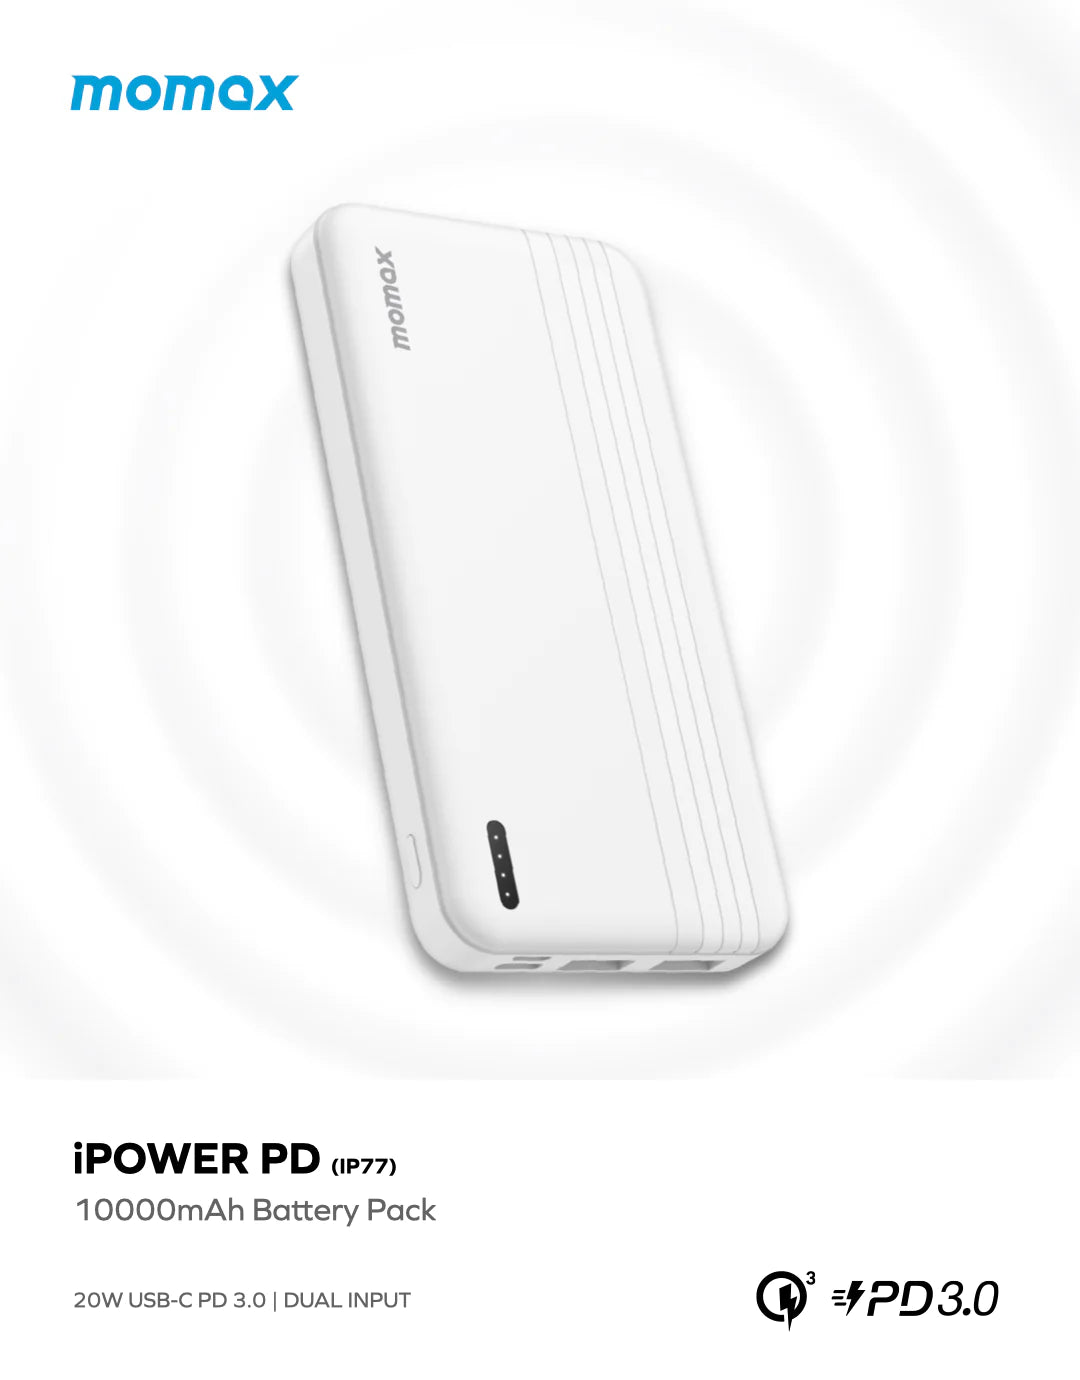 Momax iPower PD Fast Charging Power Bank 10000mAh